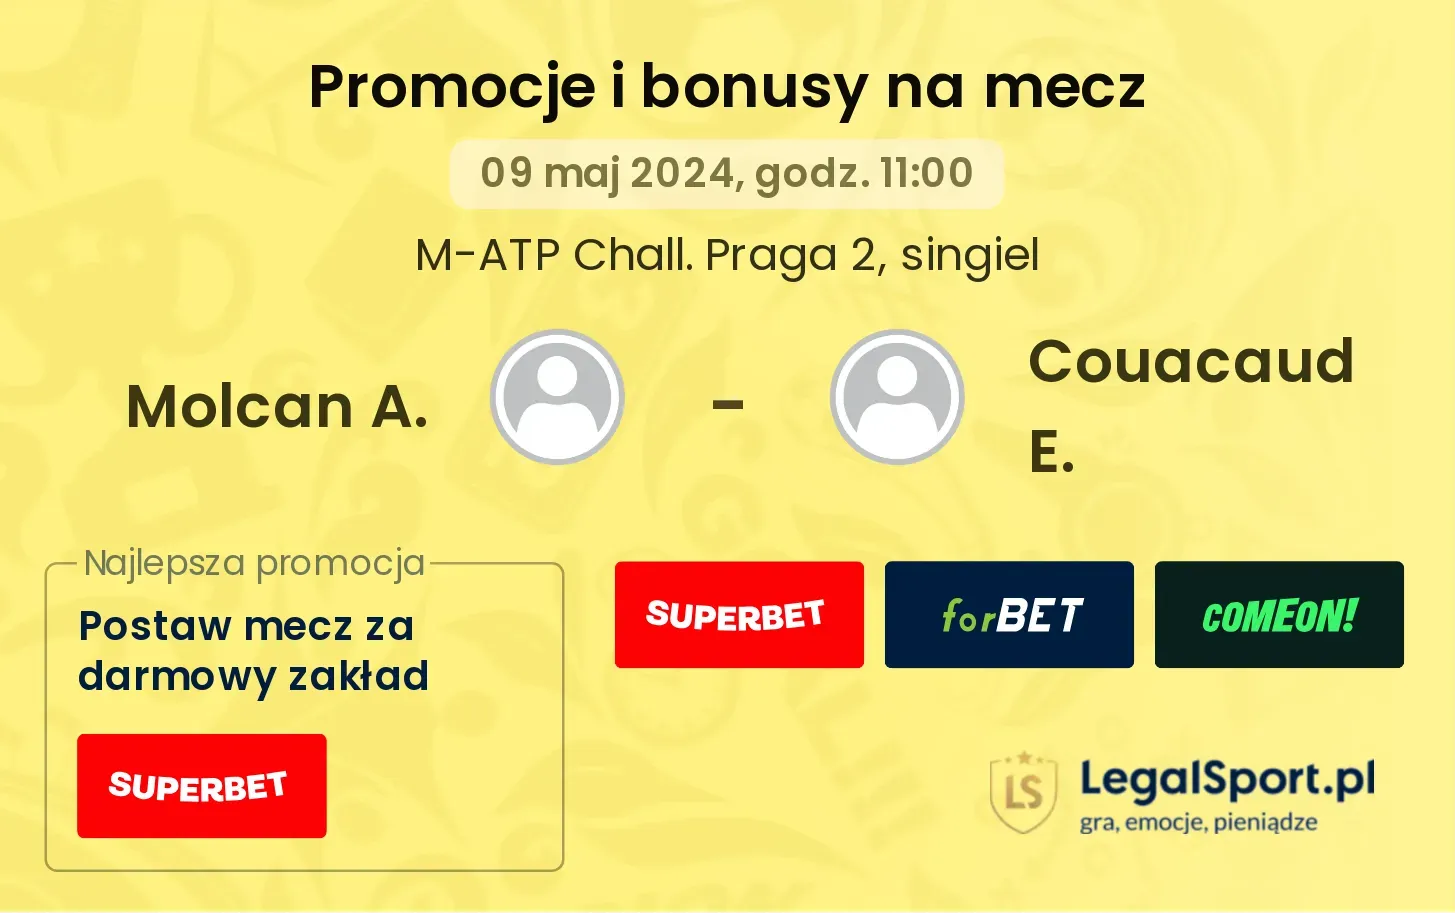 Molcan A. - Couacaud E. promocje bonusy na mecz